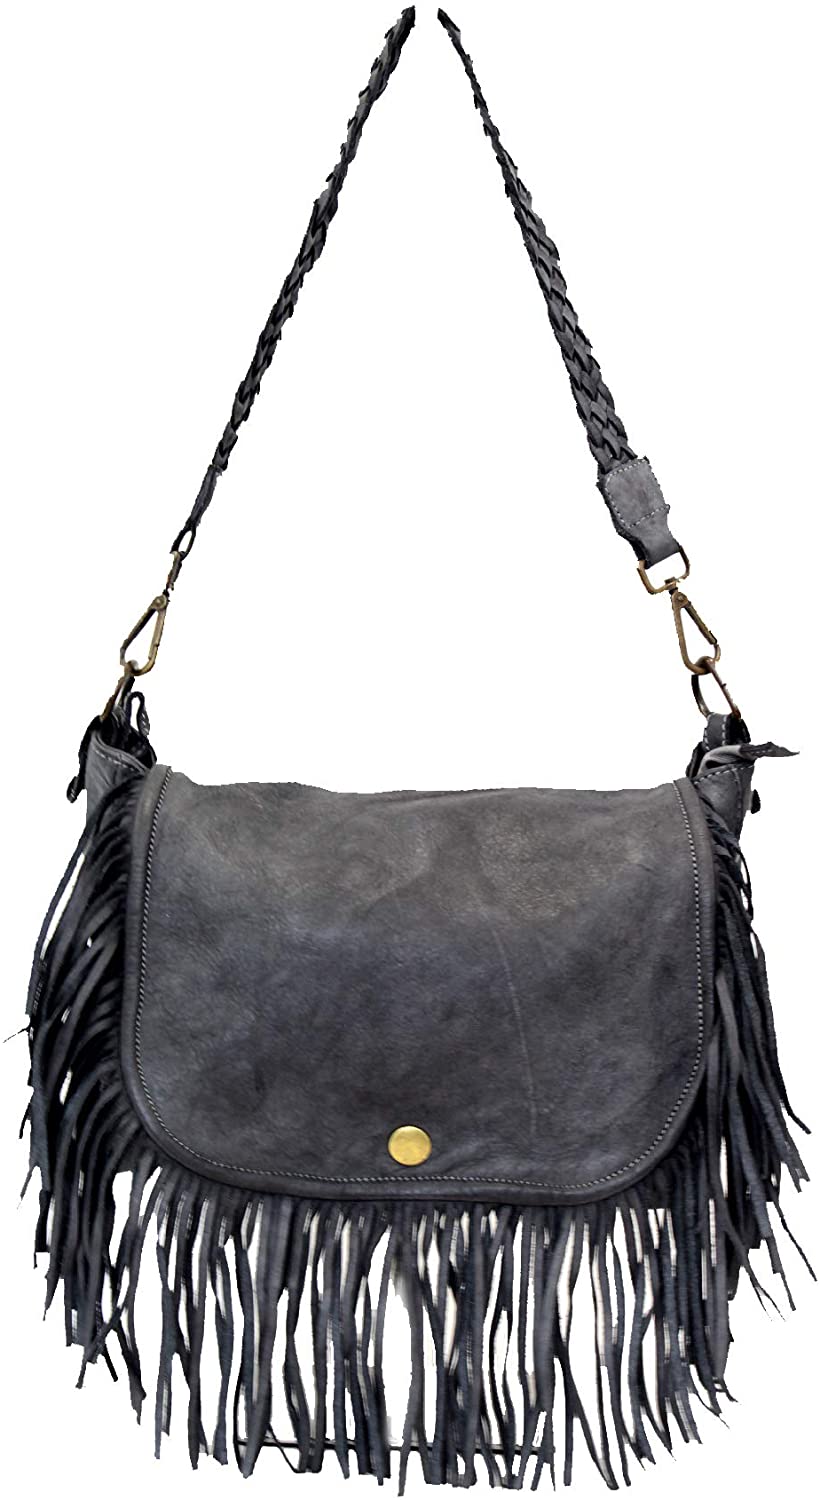 BZNA Bag Bari grau Italy Designer Damen Handtasche Ledertasche Schultertasche Tasche Leder Shopper Neu